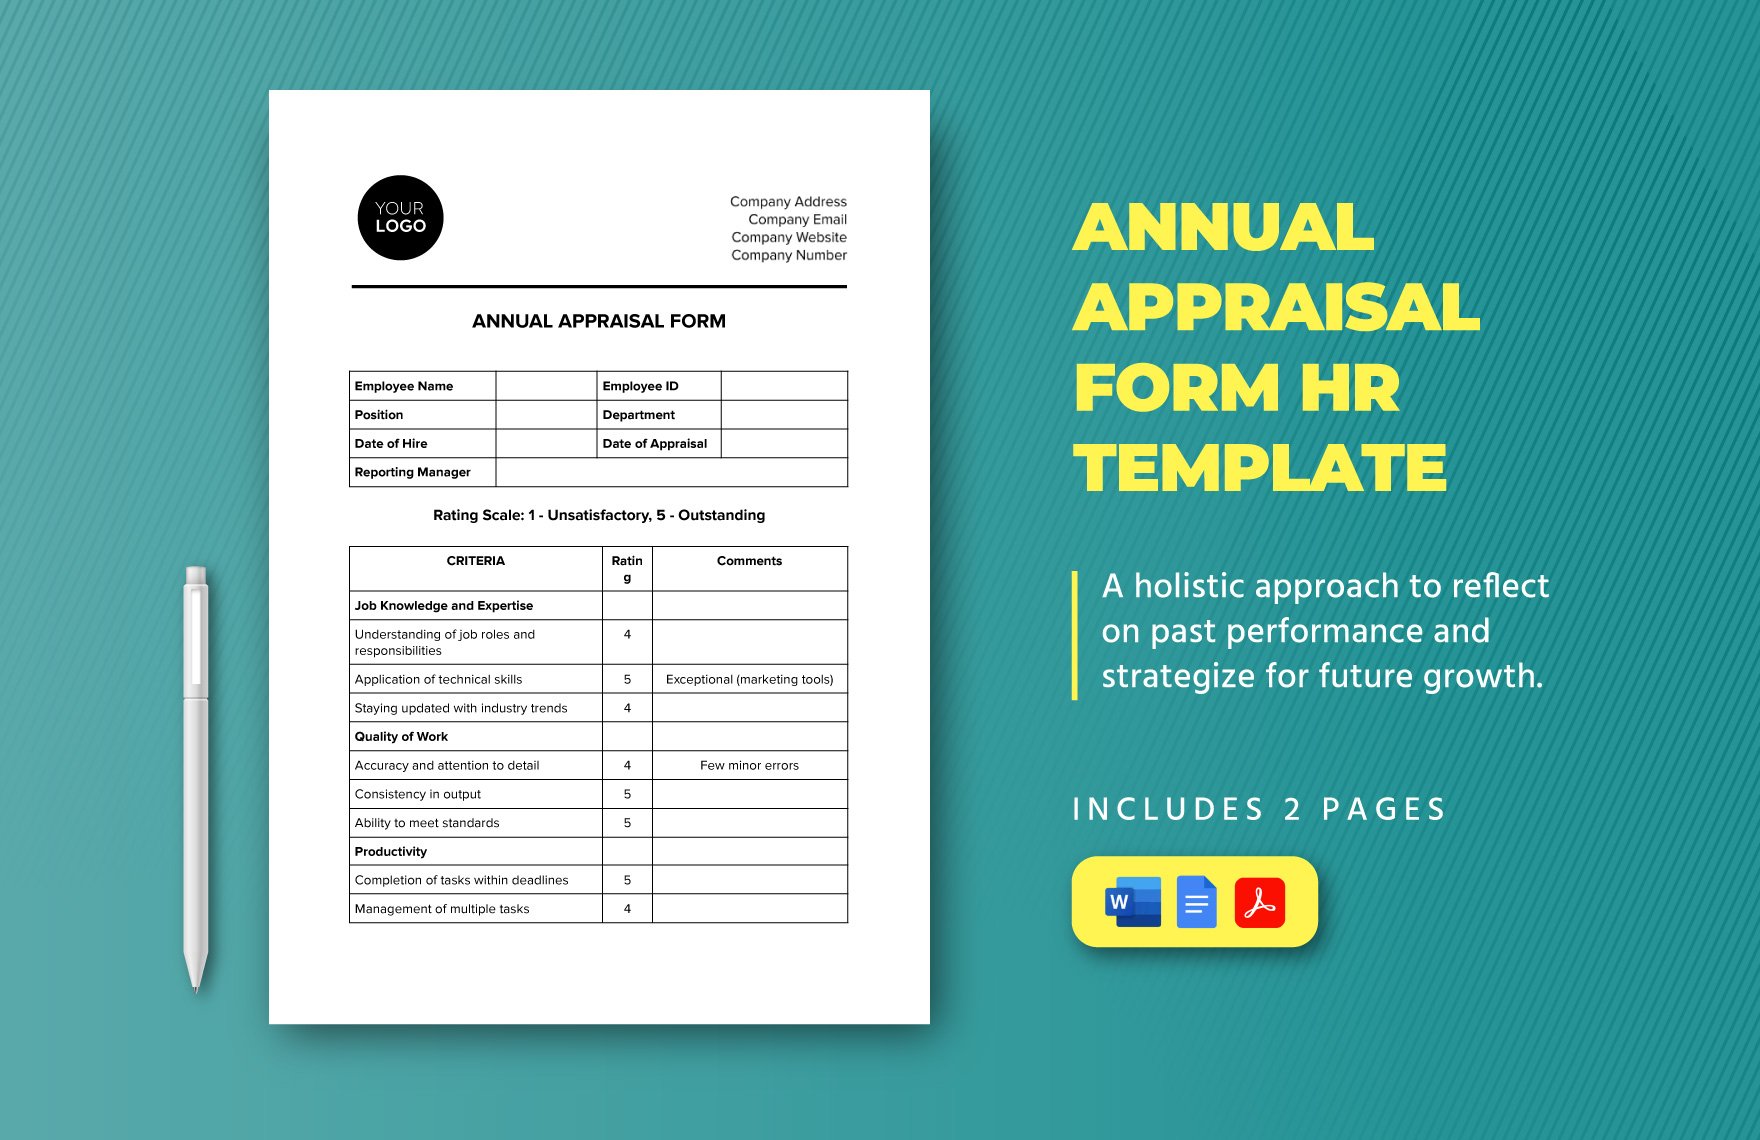 Annual Appraisal Form HR Template